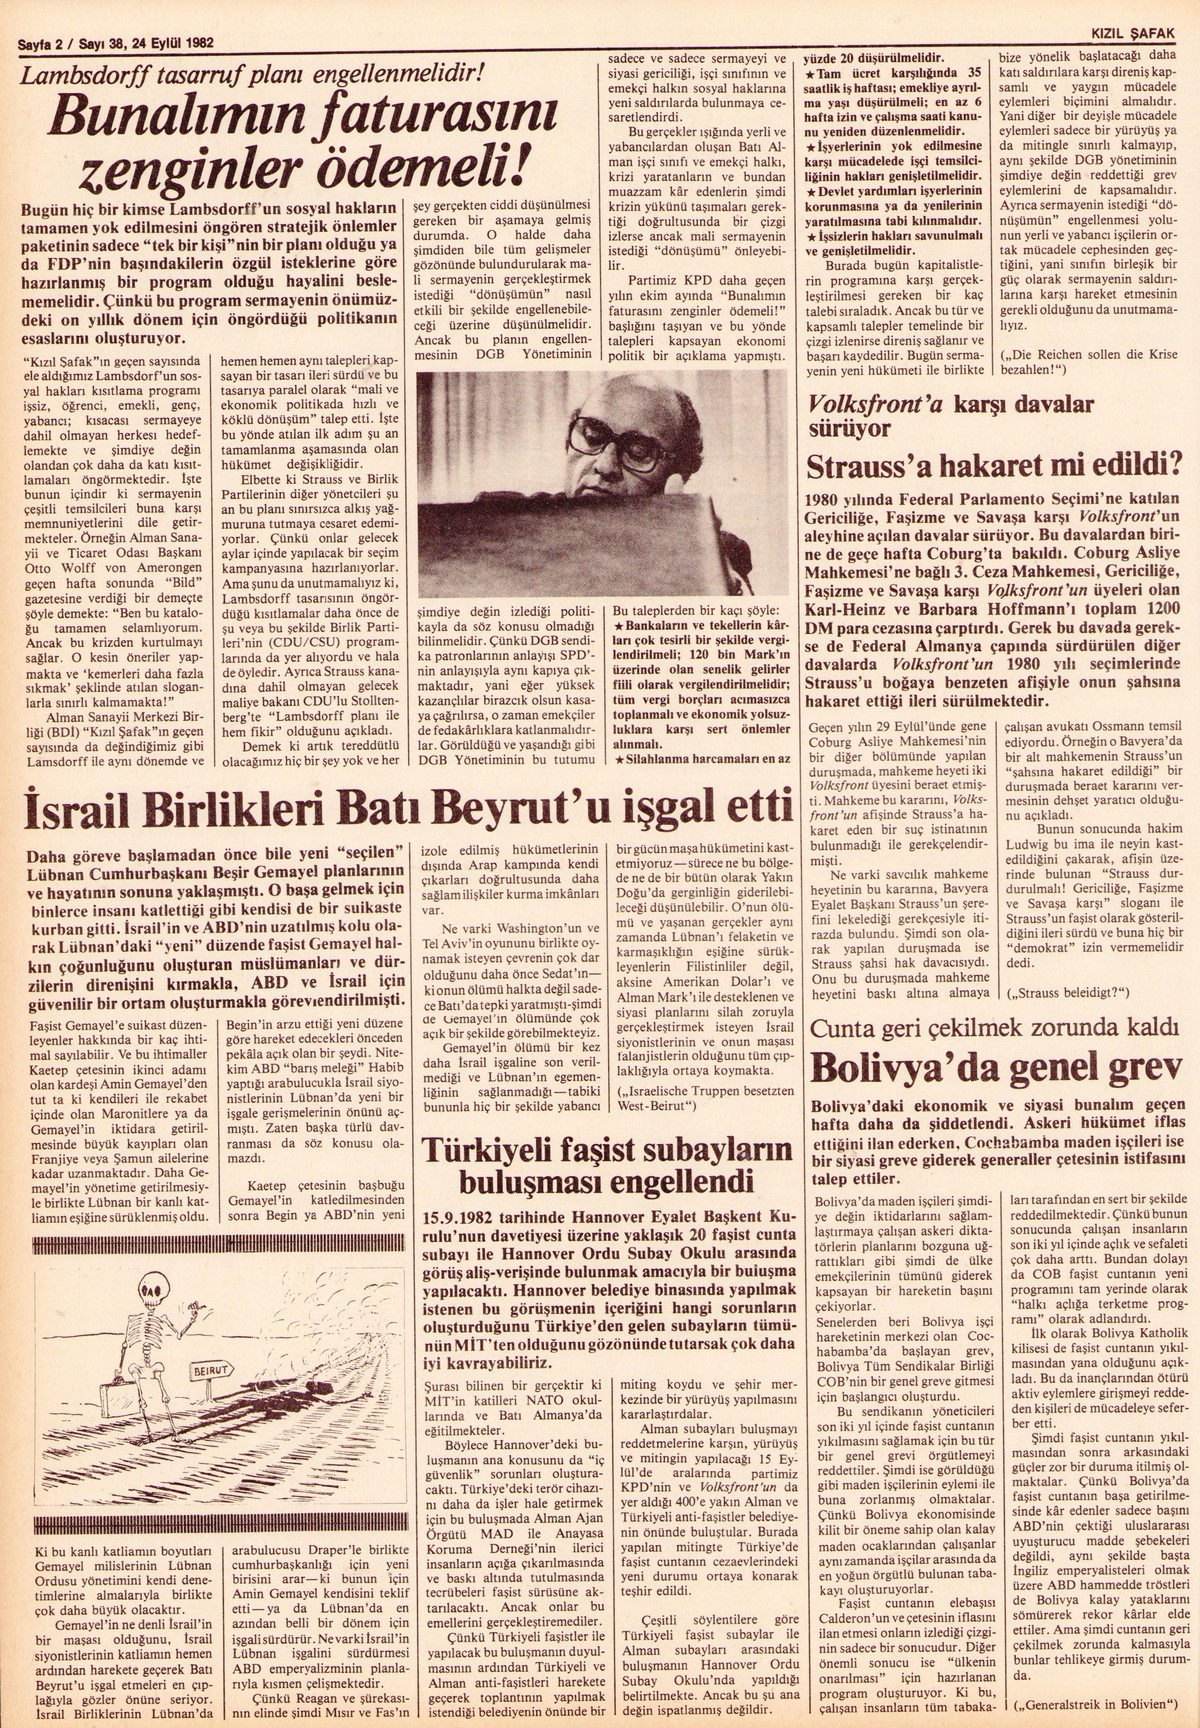 Roter Morgen, 16. Jg., 24. September 1982, Nr. 38, Seite 15